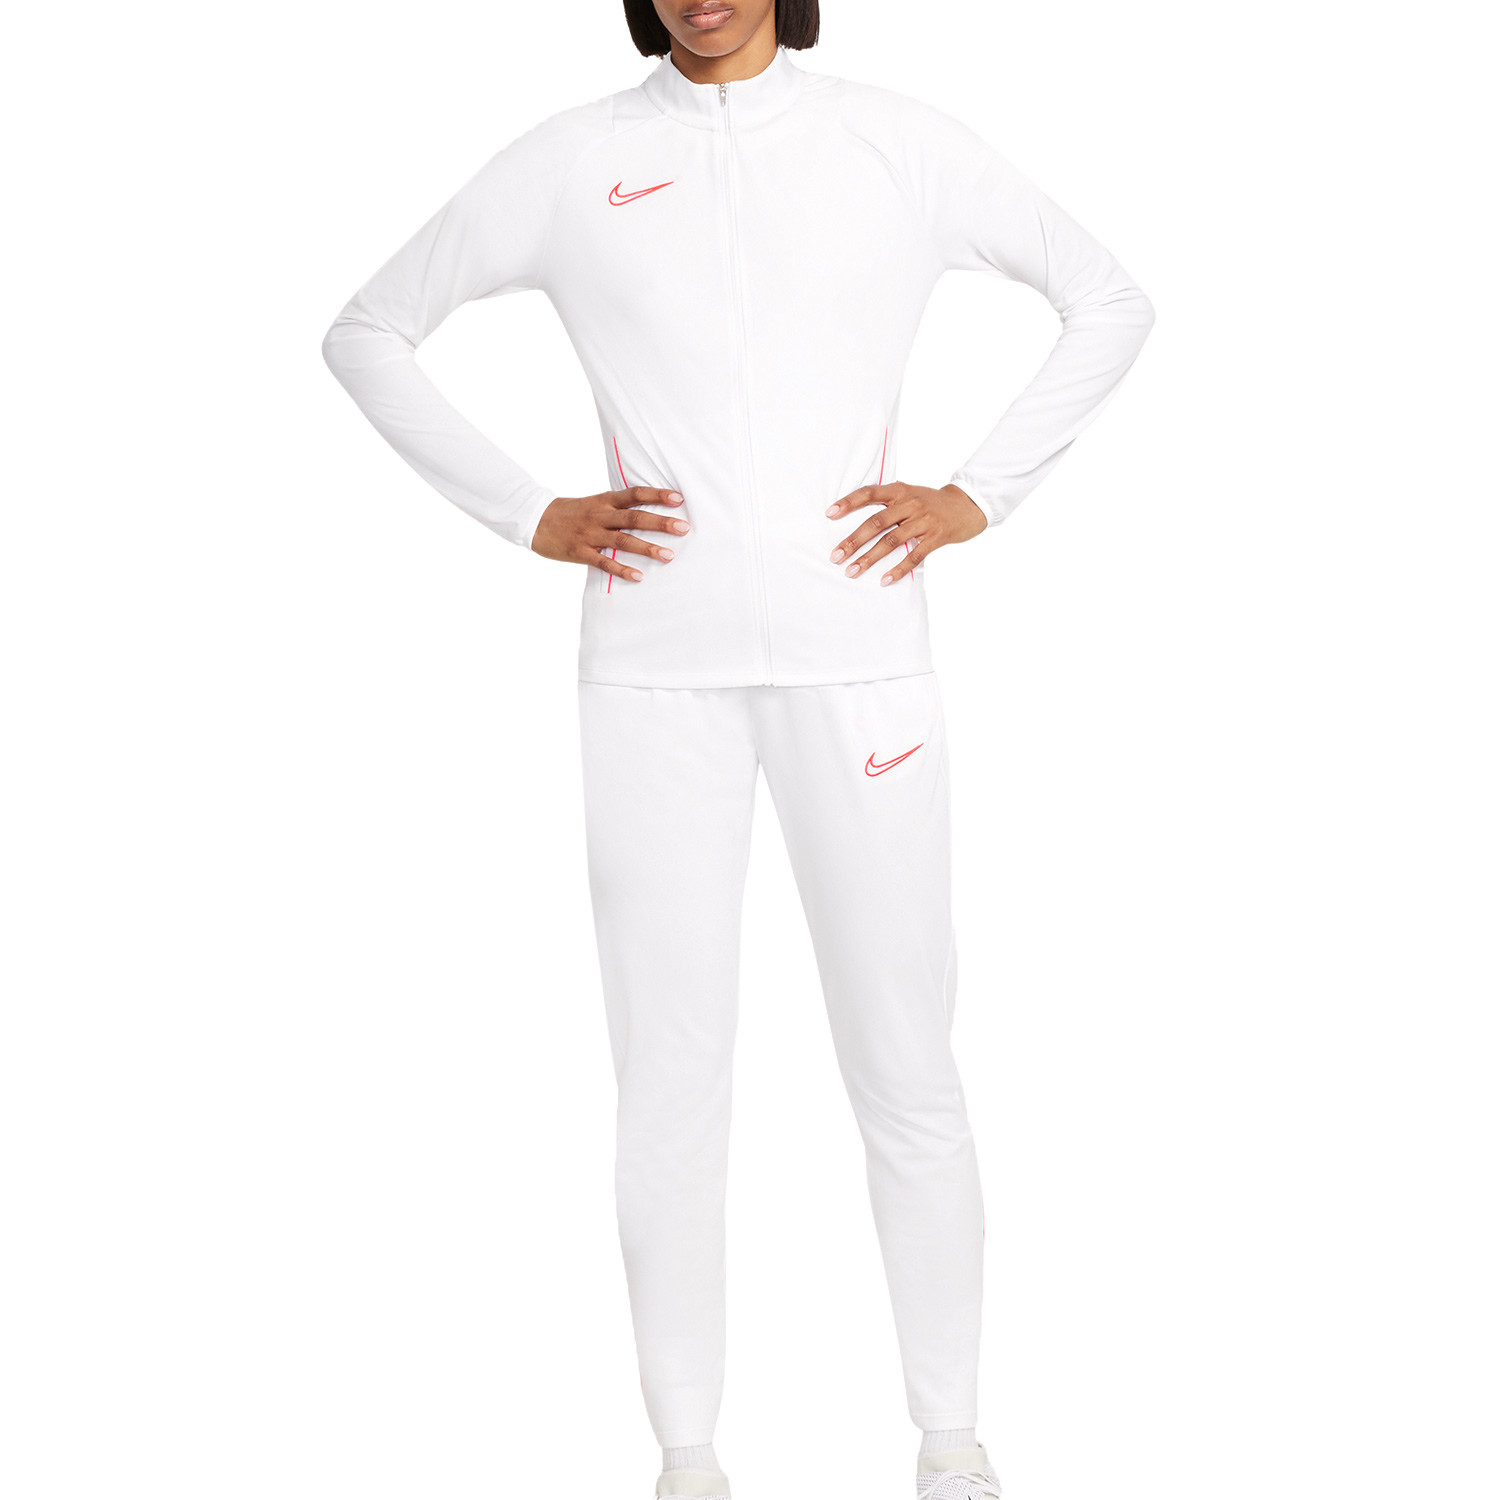 Nike mujer Academy blanco | futbolmania